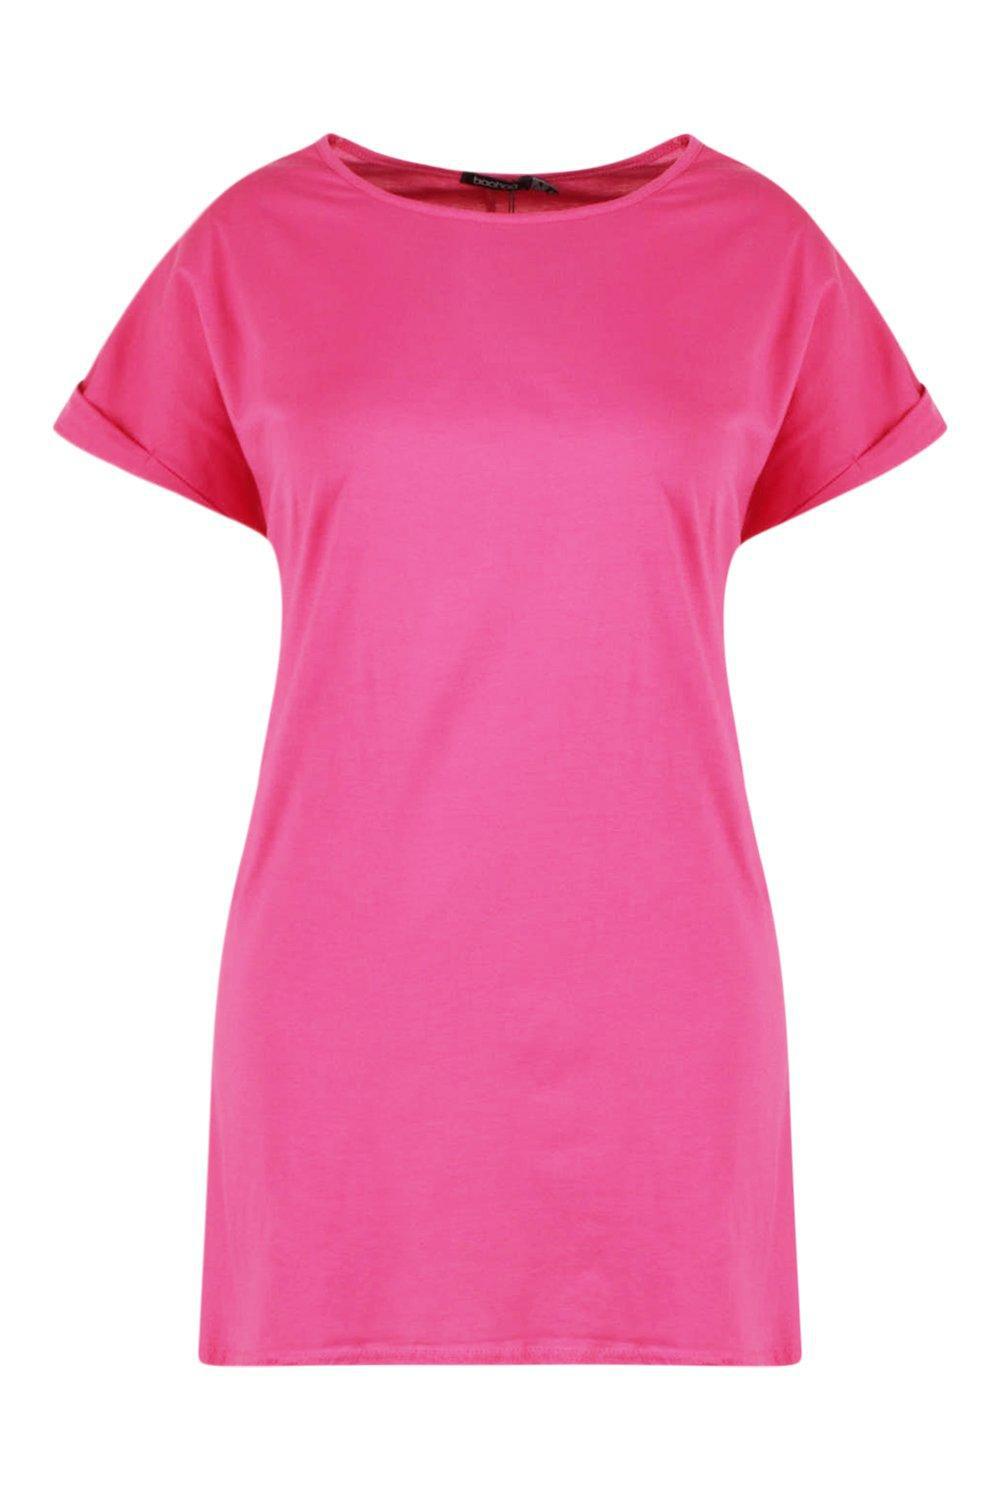 hot pink tshirt dress